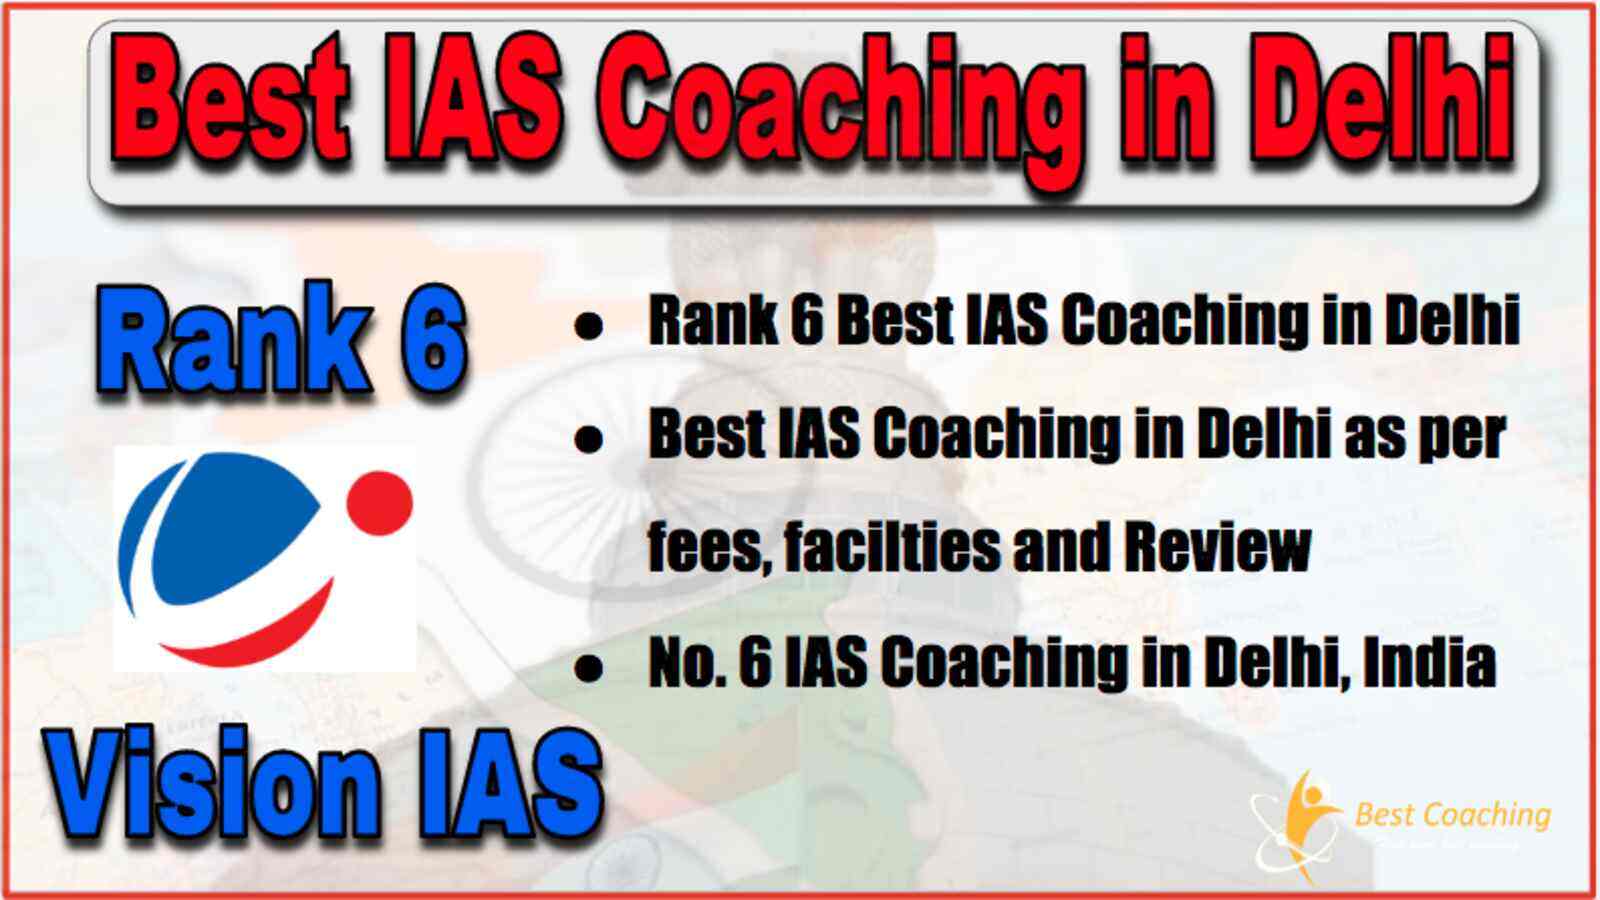 Rank 6 Best IAS Coaching in Delhi